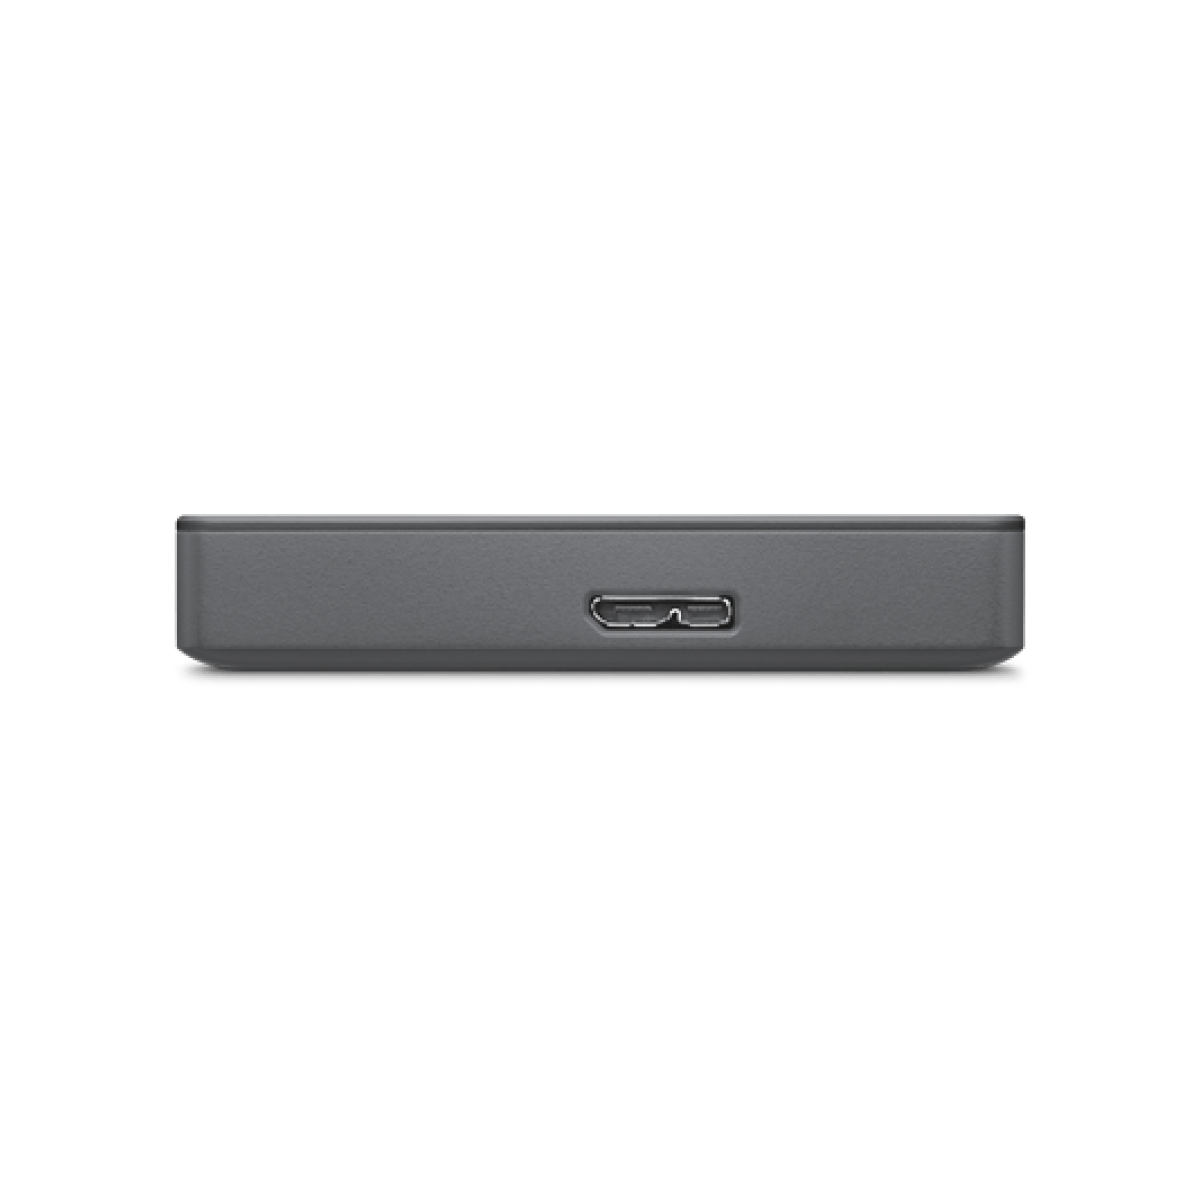 Disque Dur Externe 500Go USB 3.0 Maxtor - Third Party